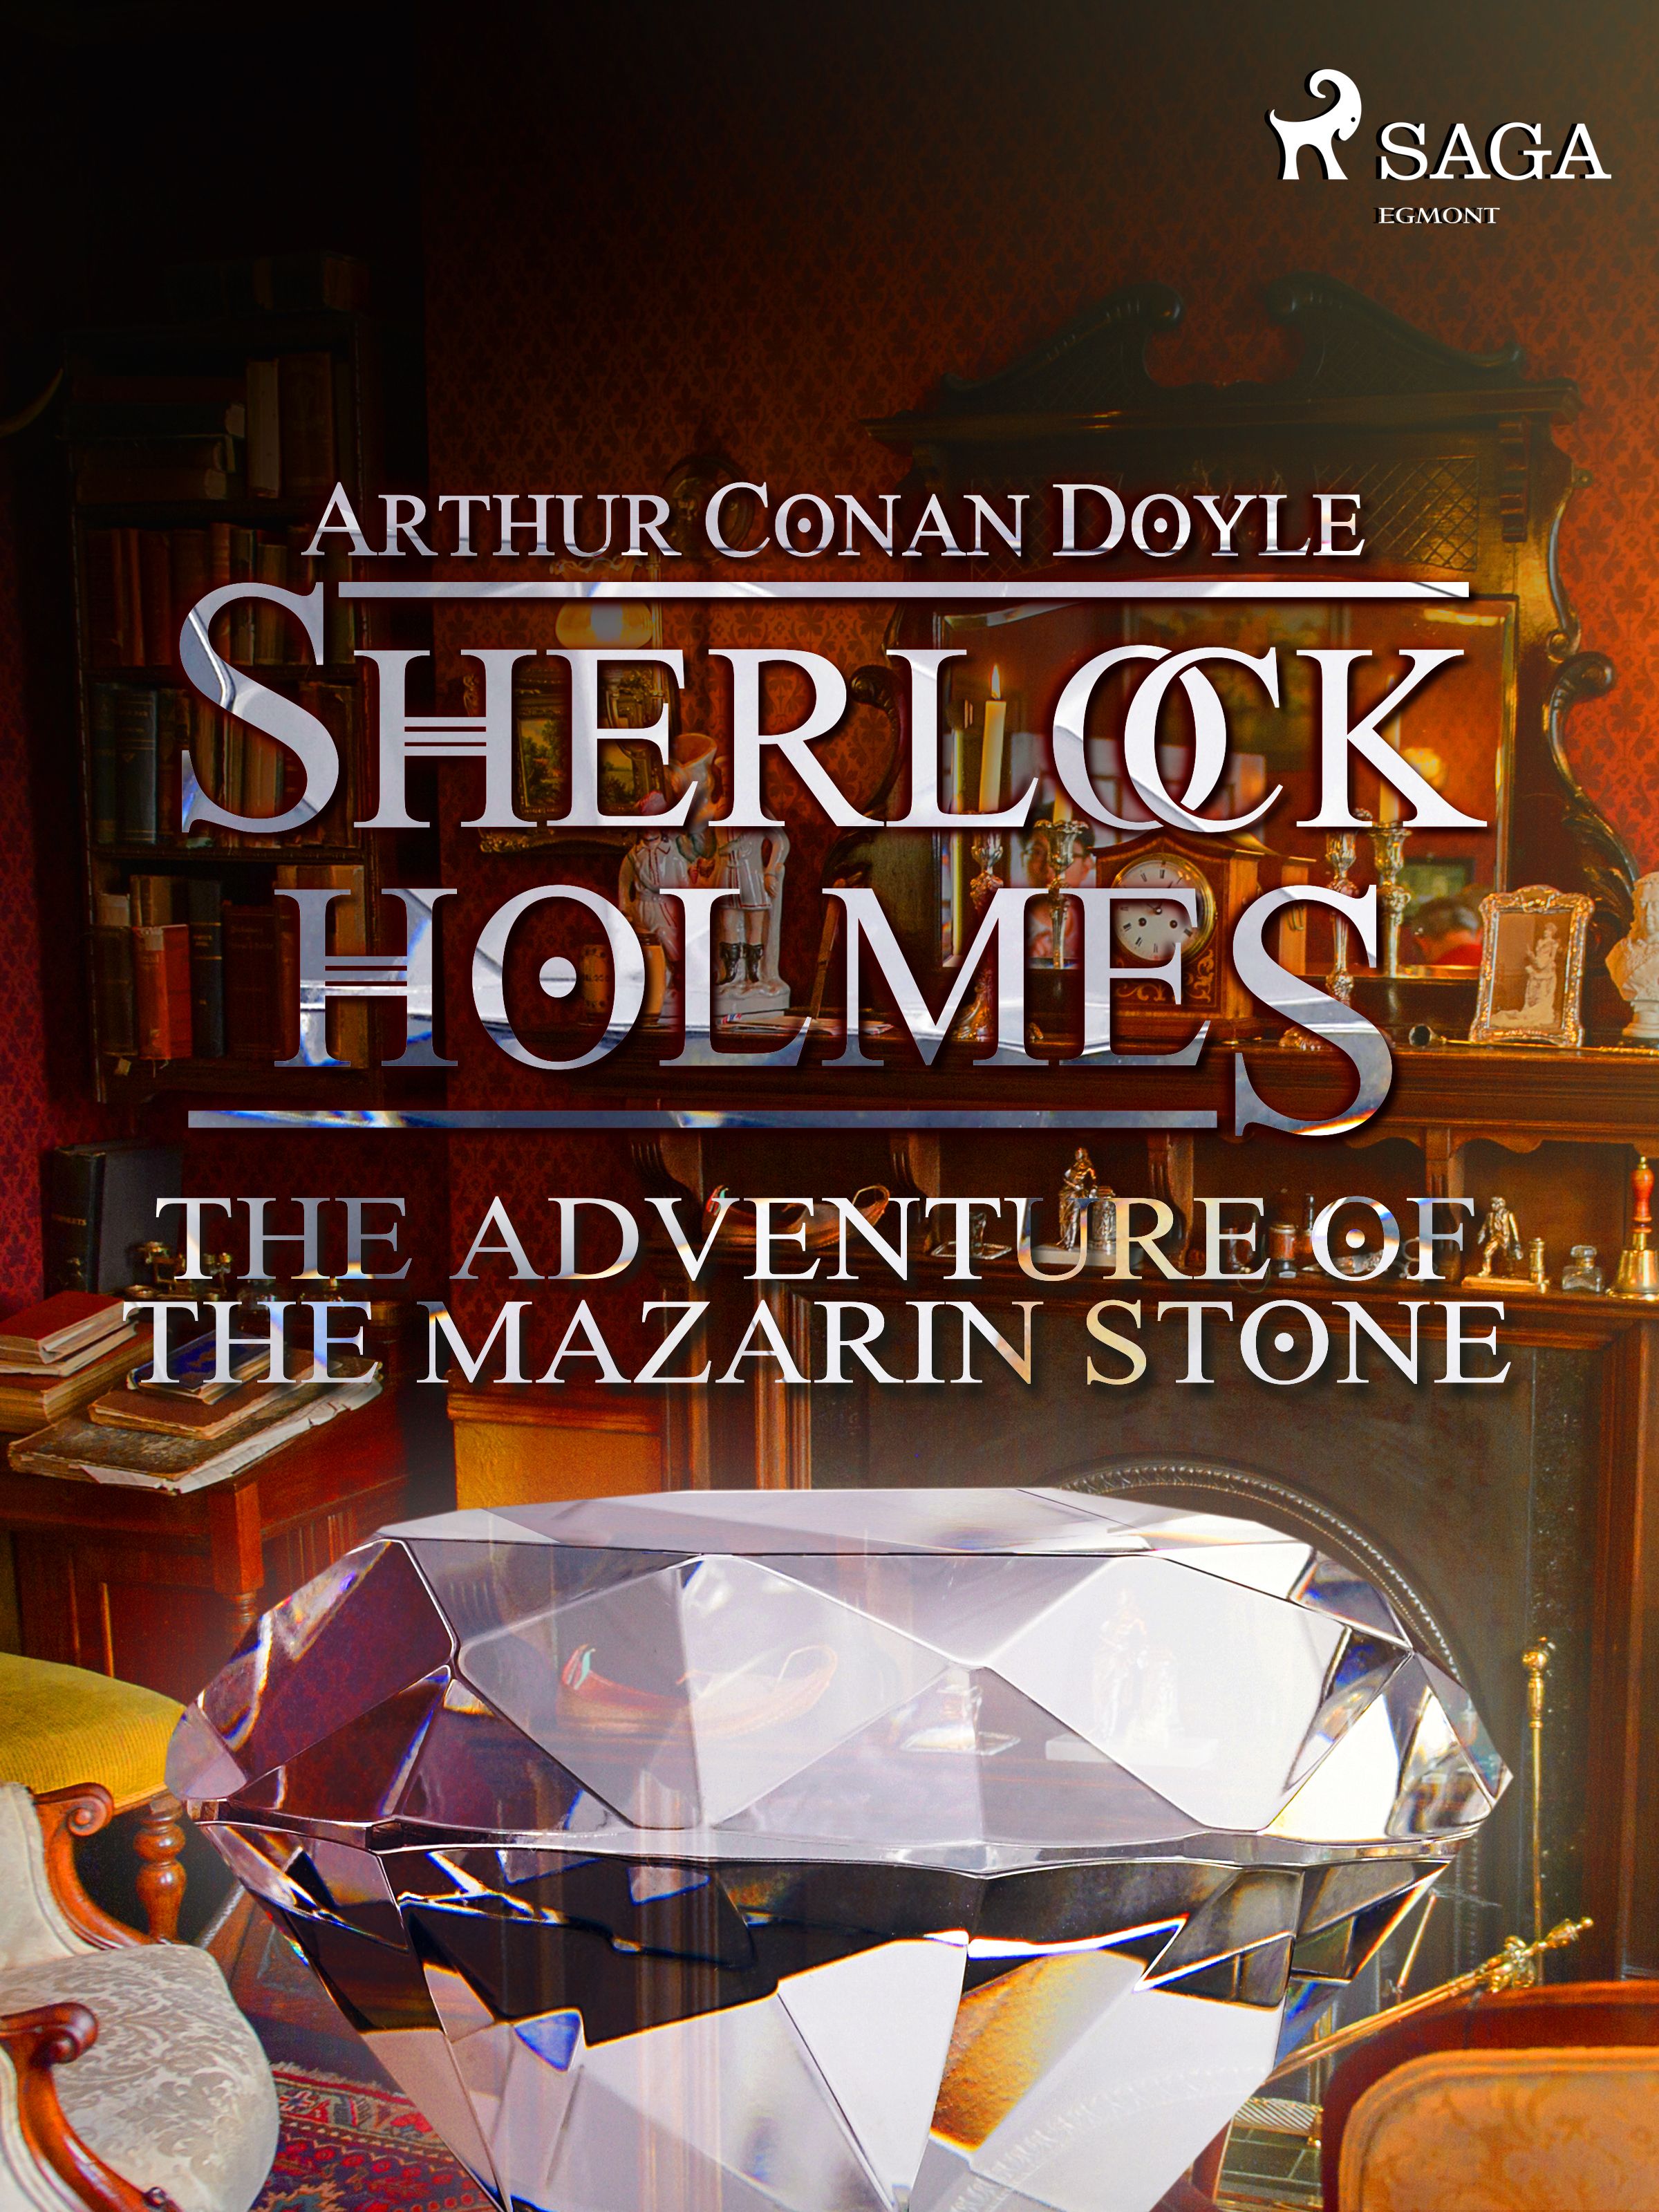 The Adventure of the Mazarin Stone, e-bog af Arthur Conan Doyle